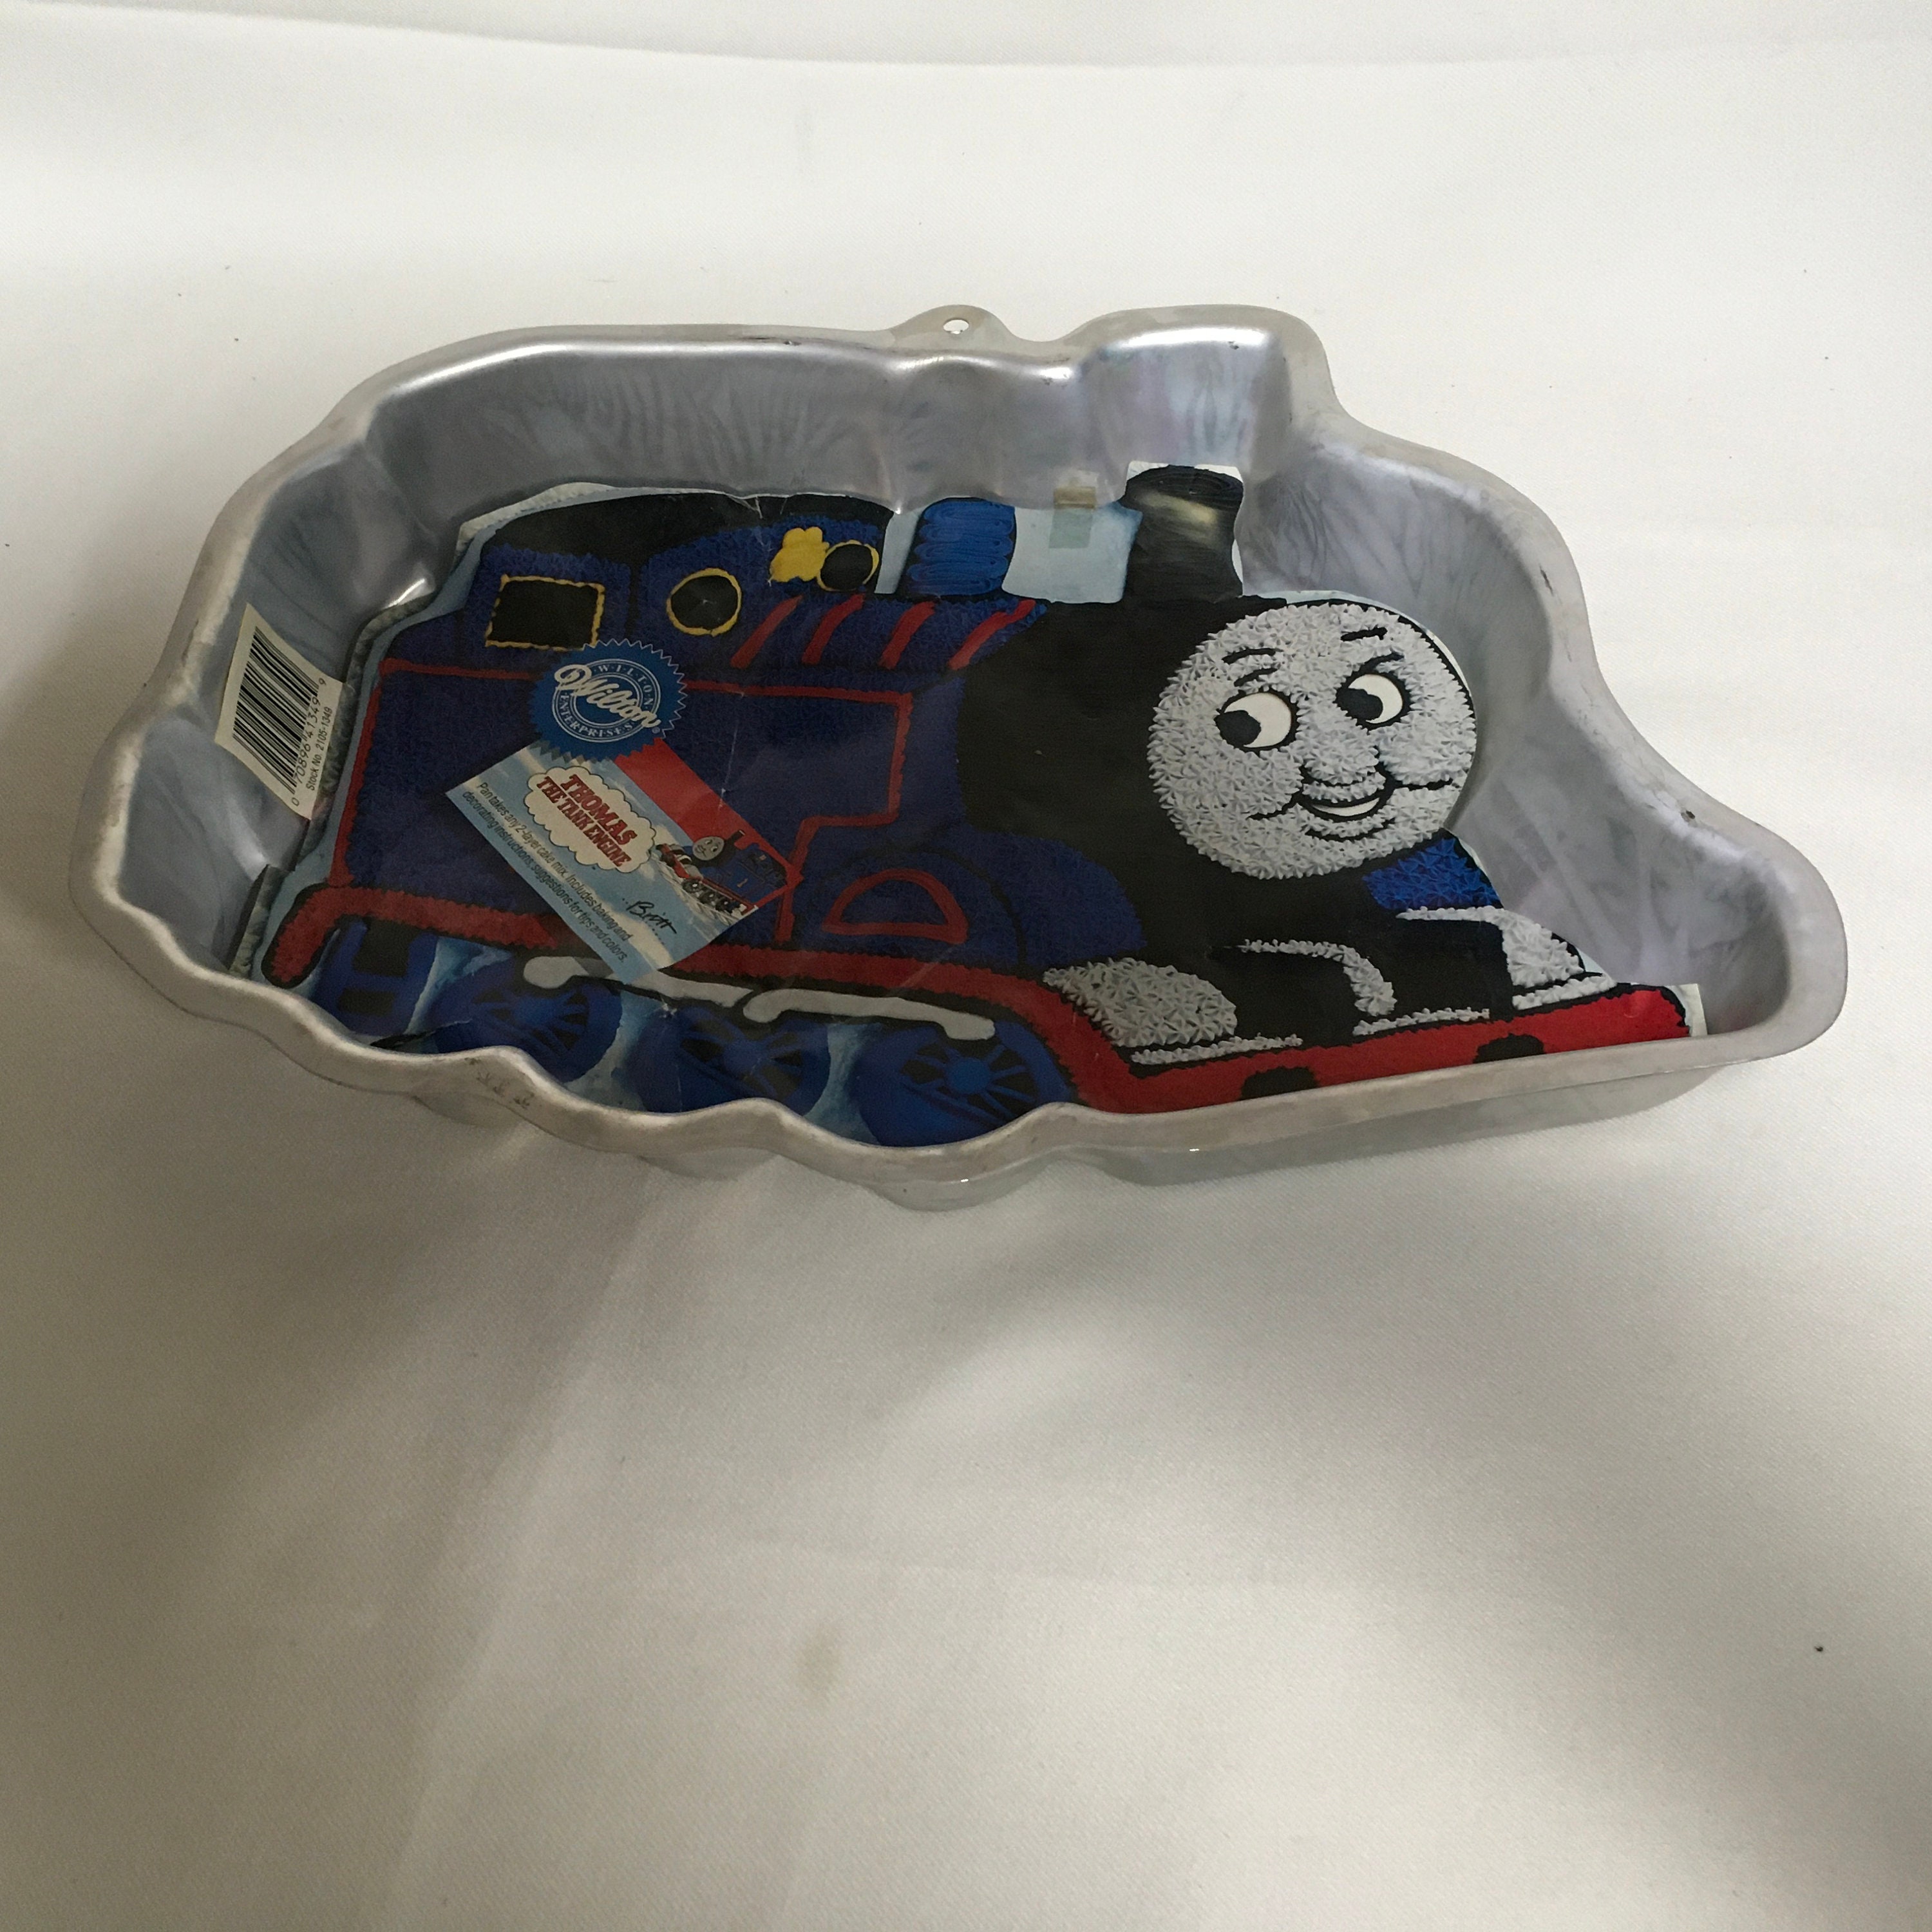 Thomas the Train cake using Wilton cake pan for 3D train